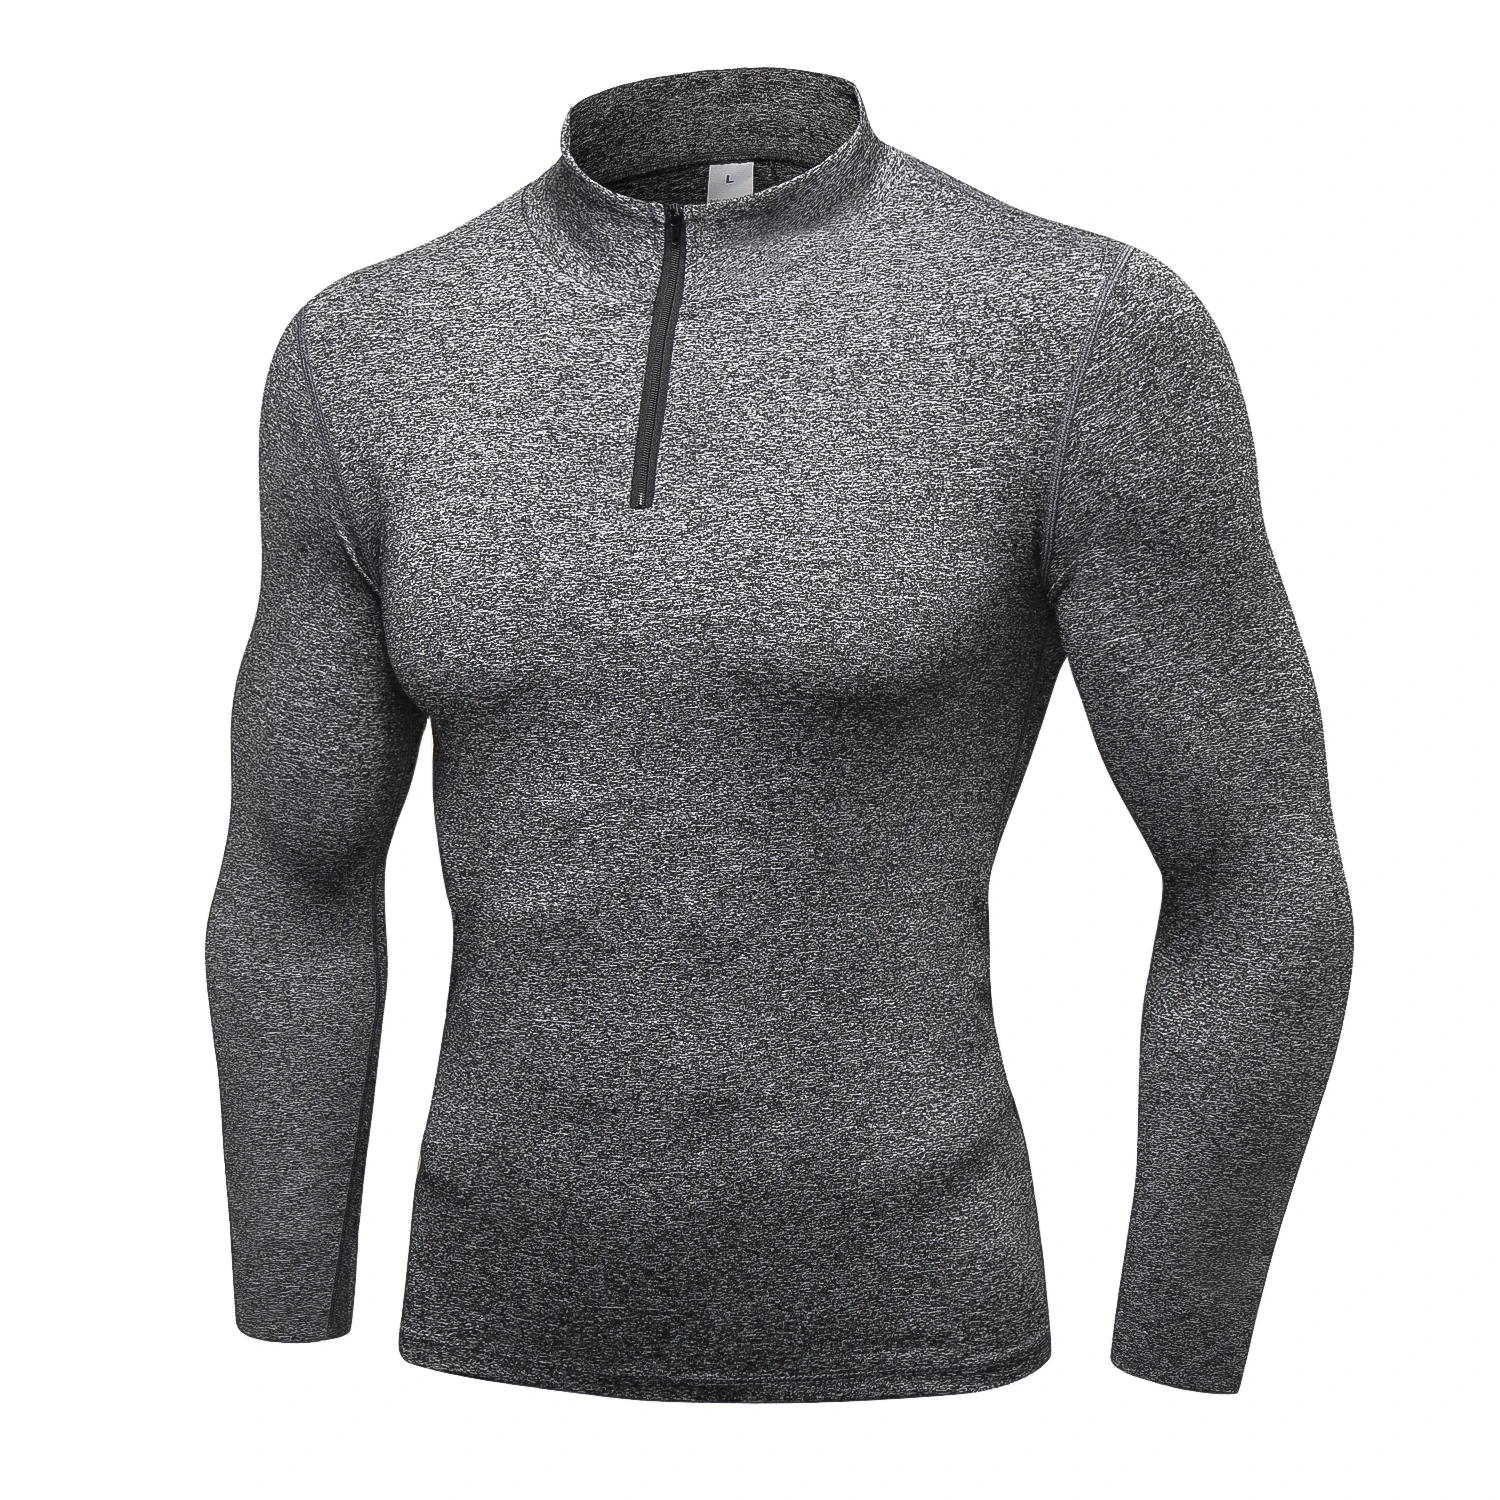 Mens Compression Shirt 1/4 Zipper Mock Neck Cool Dry Short Sleeve Gym Base Layer 